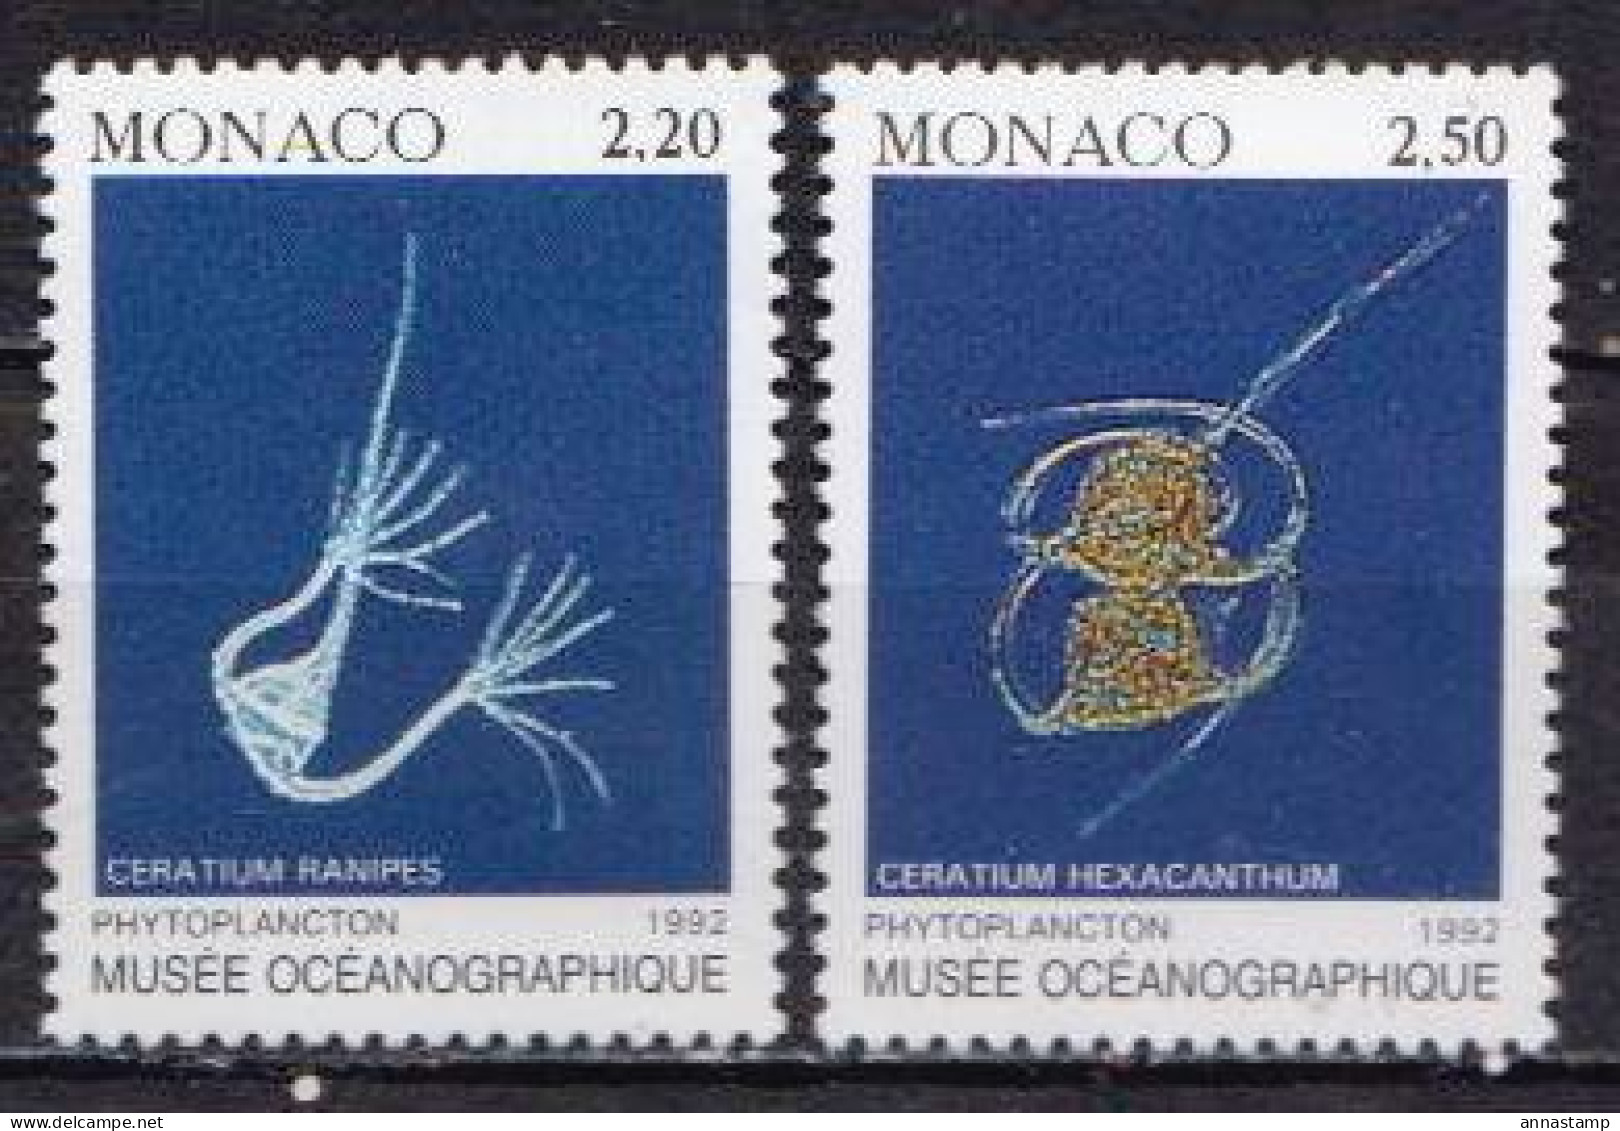 Monaco MNH Set - Marine Life